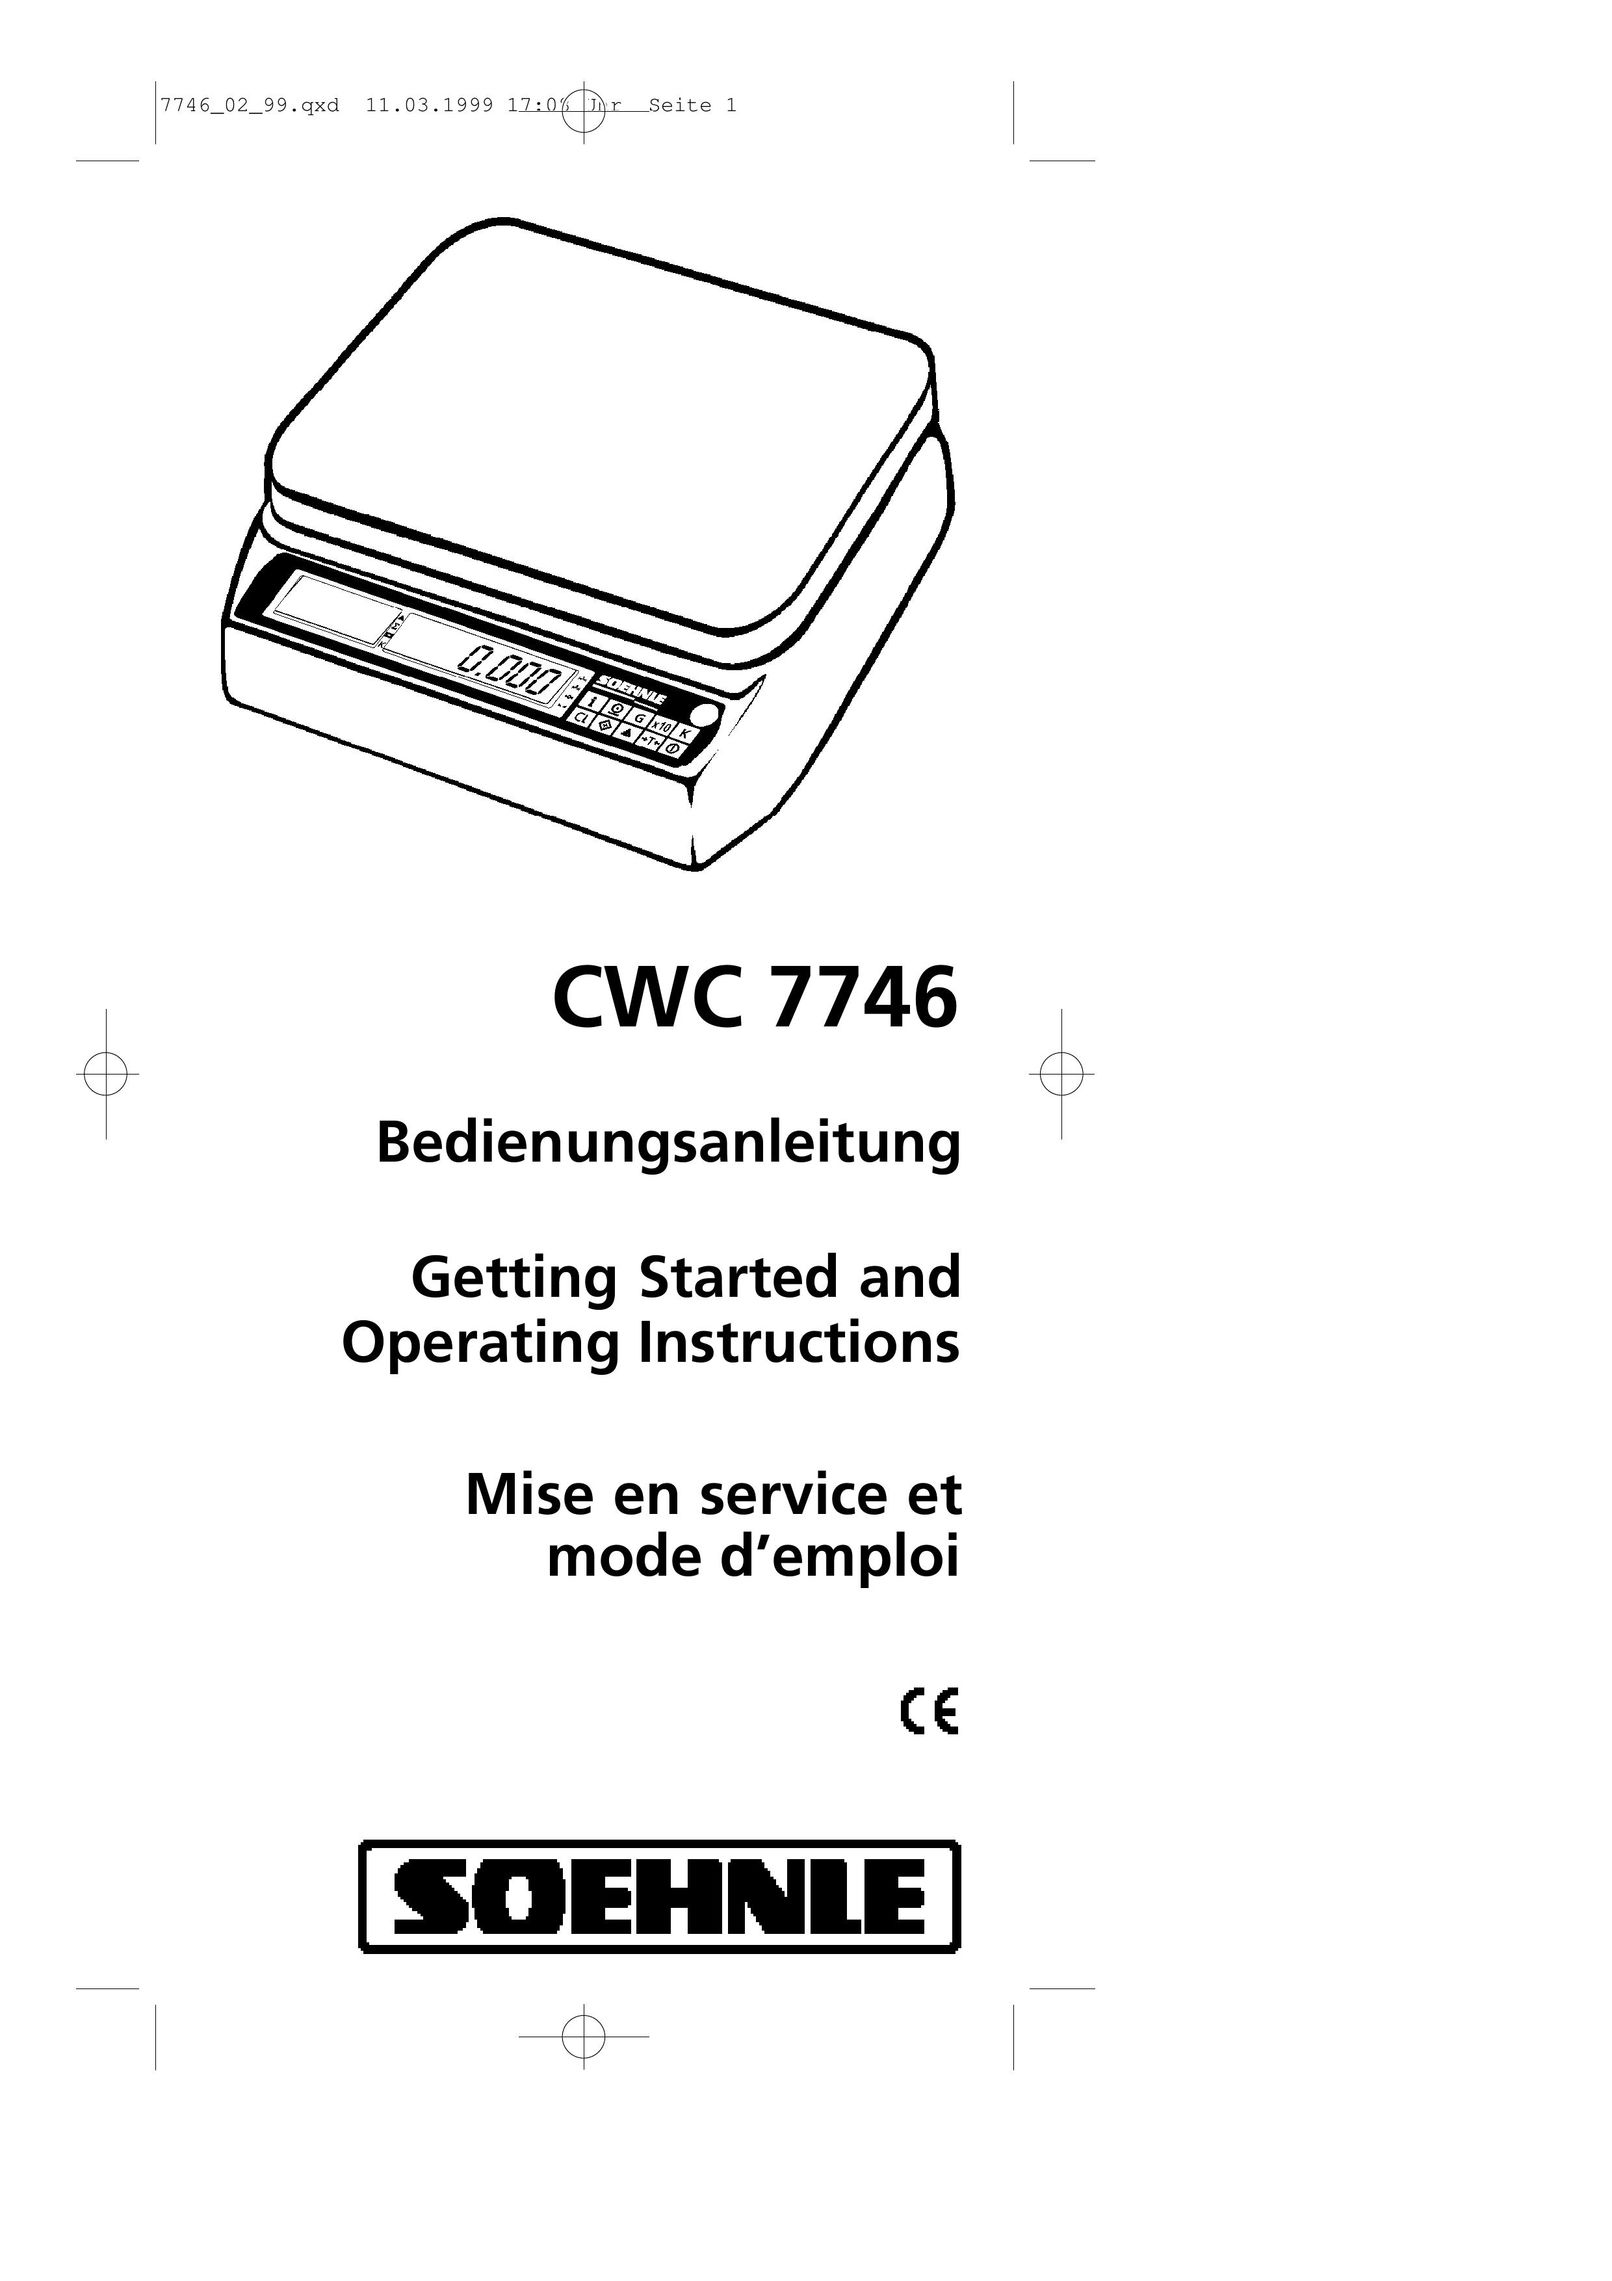 Soehnle CWC7746 Postal Equipment User Manual